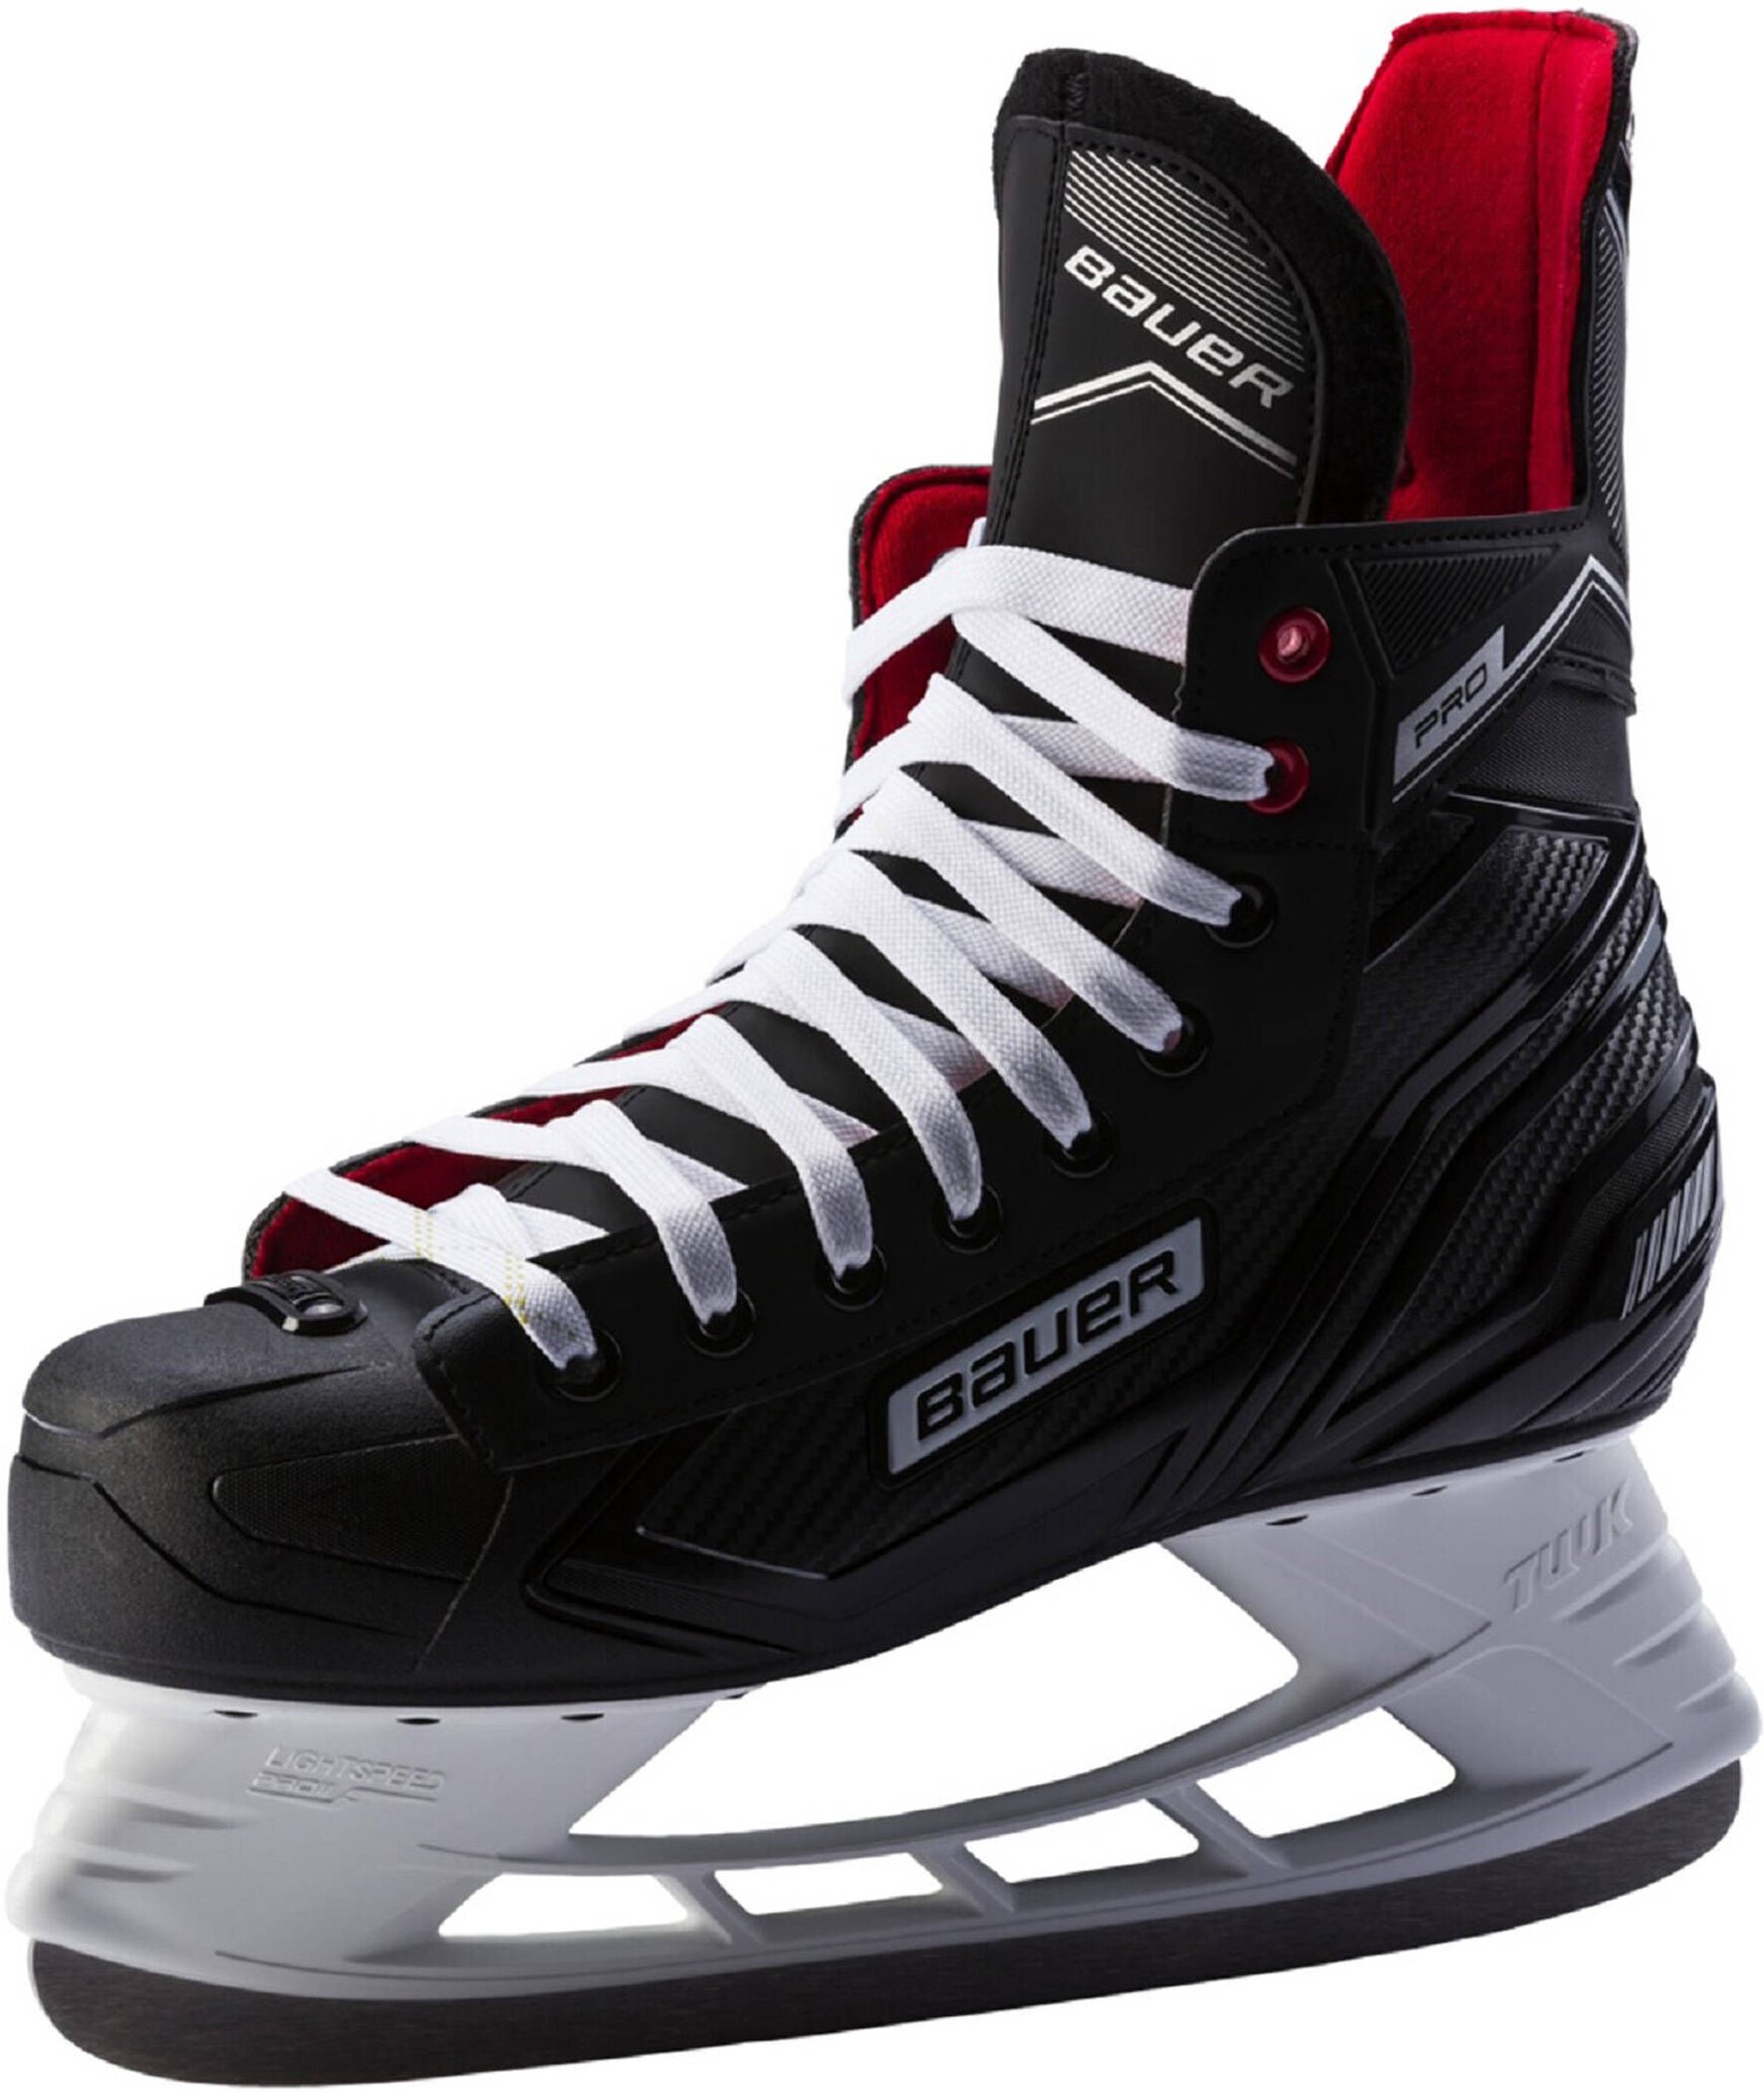 Ju.-Eishockey-Schuh Pro Skate